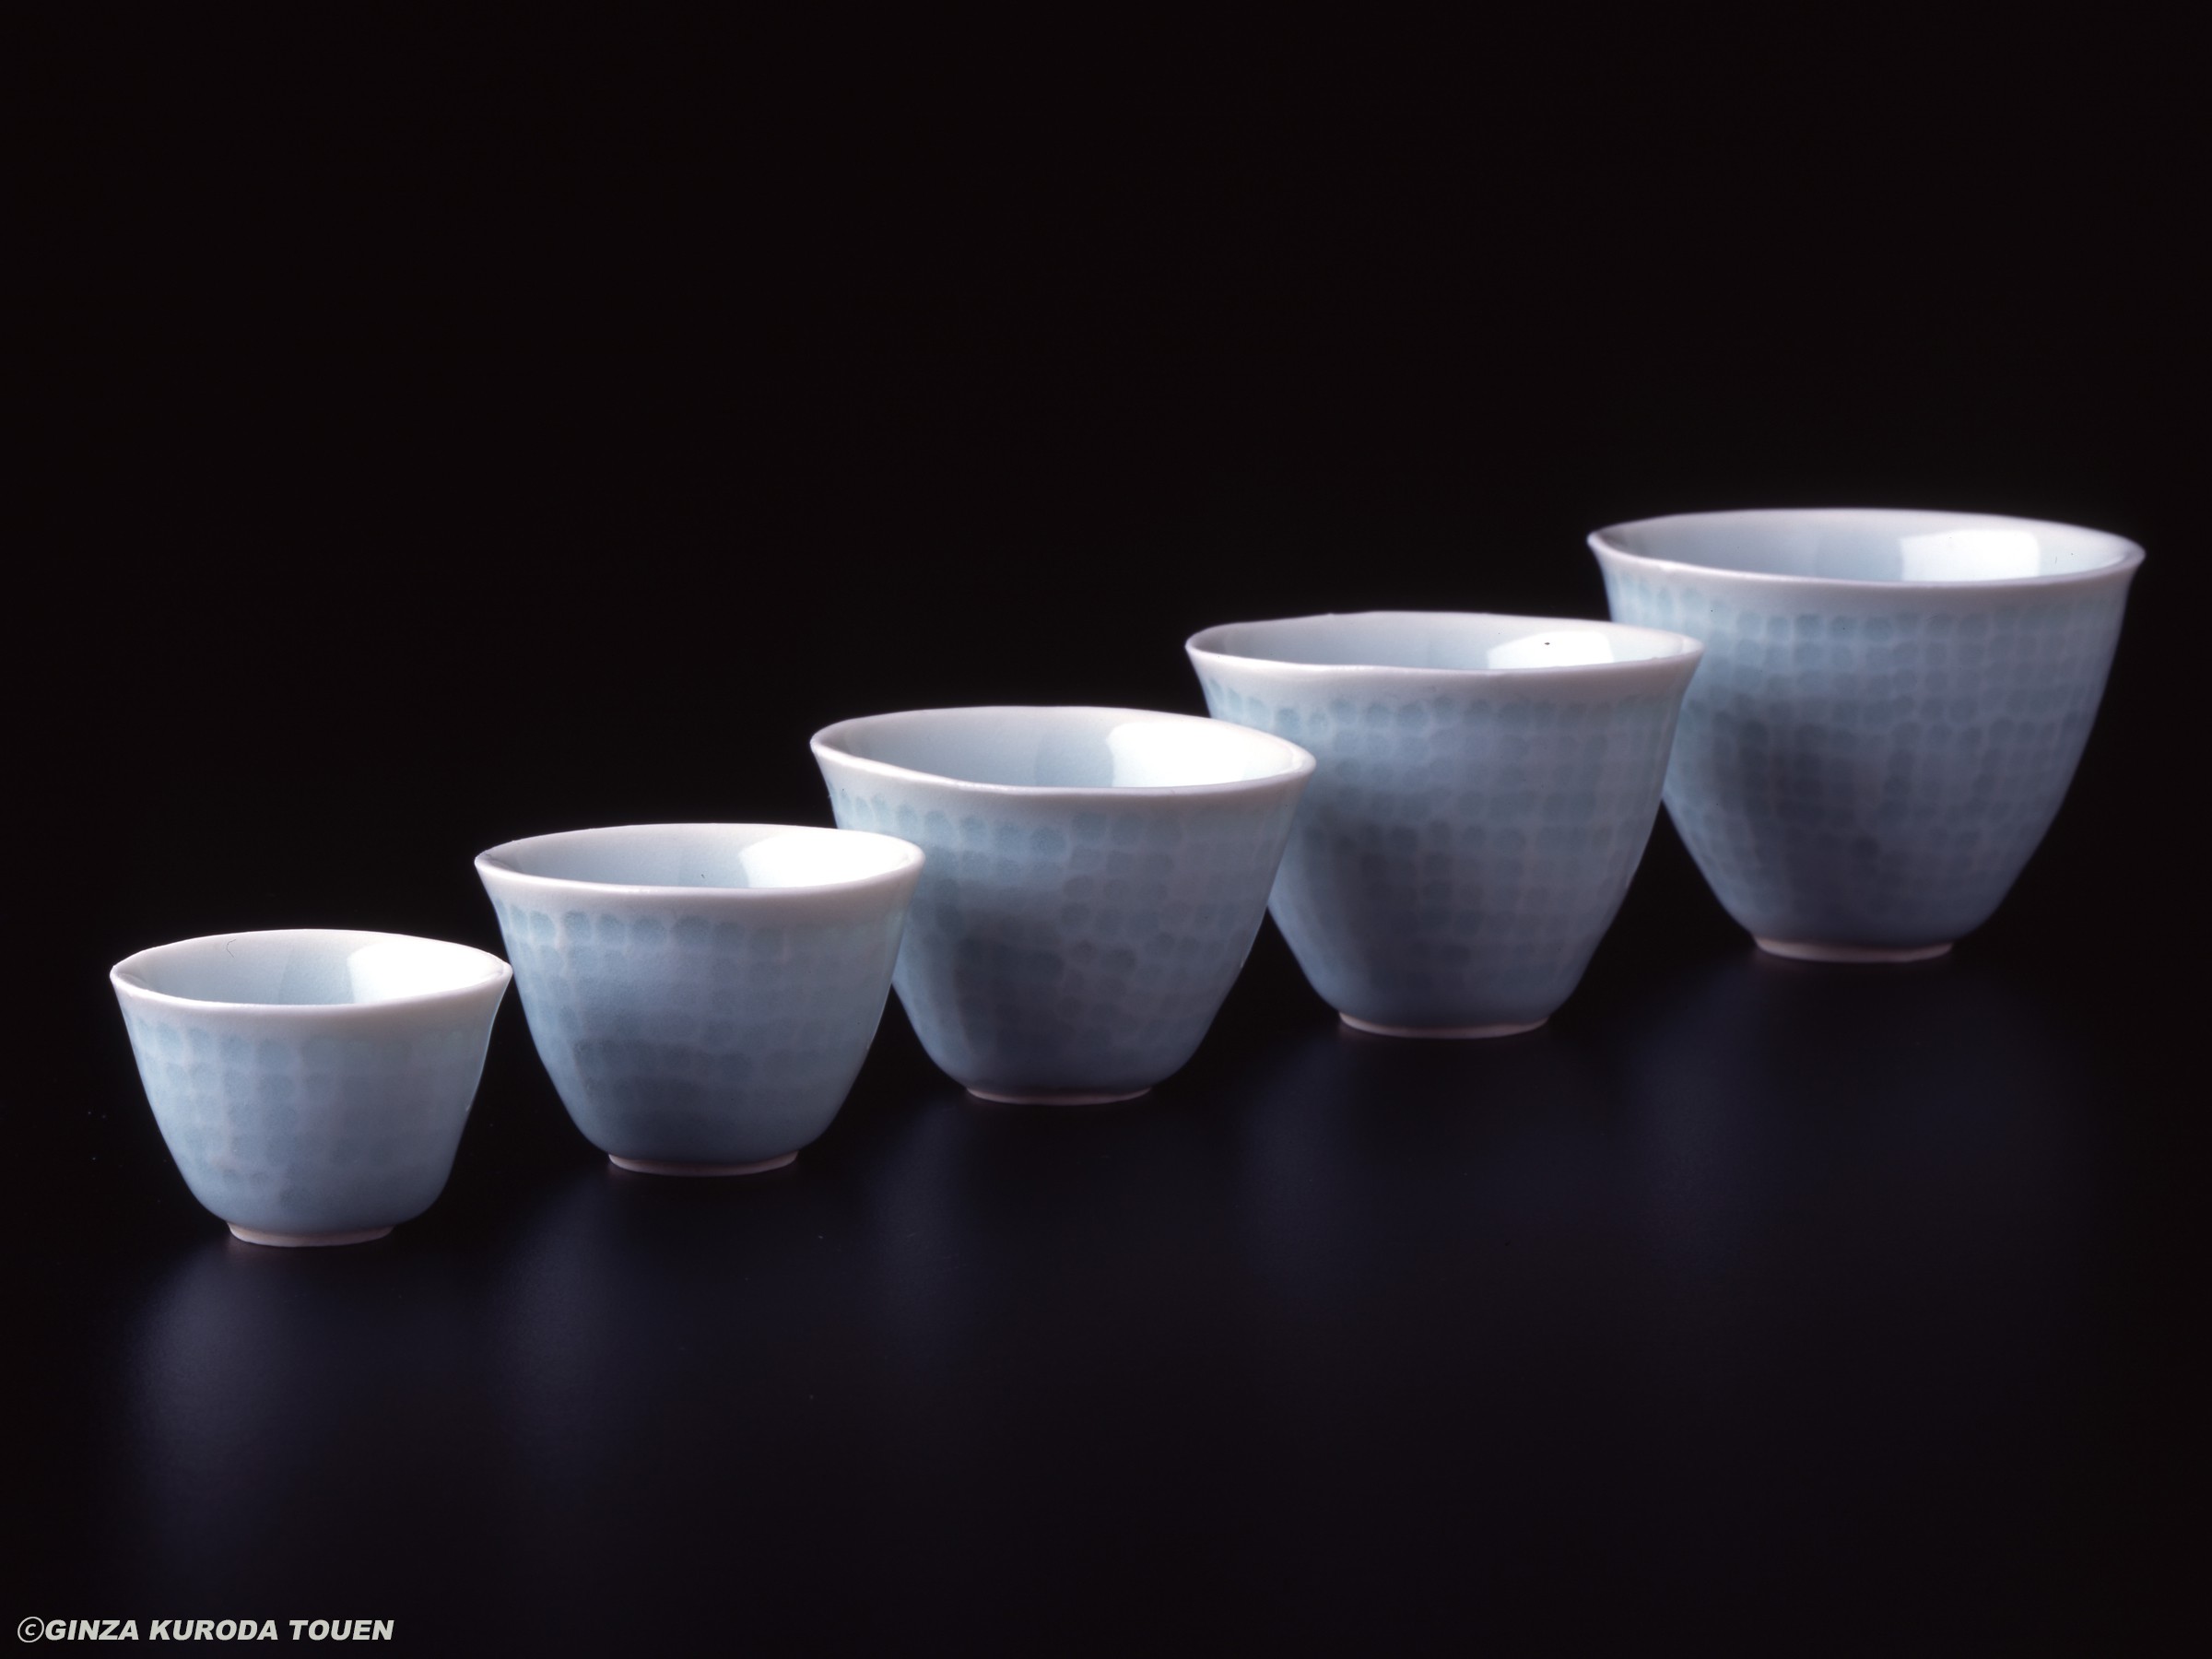 Osamu Suzuki: A set of sake cups